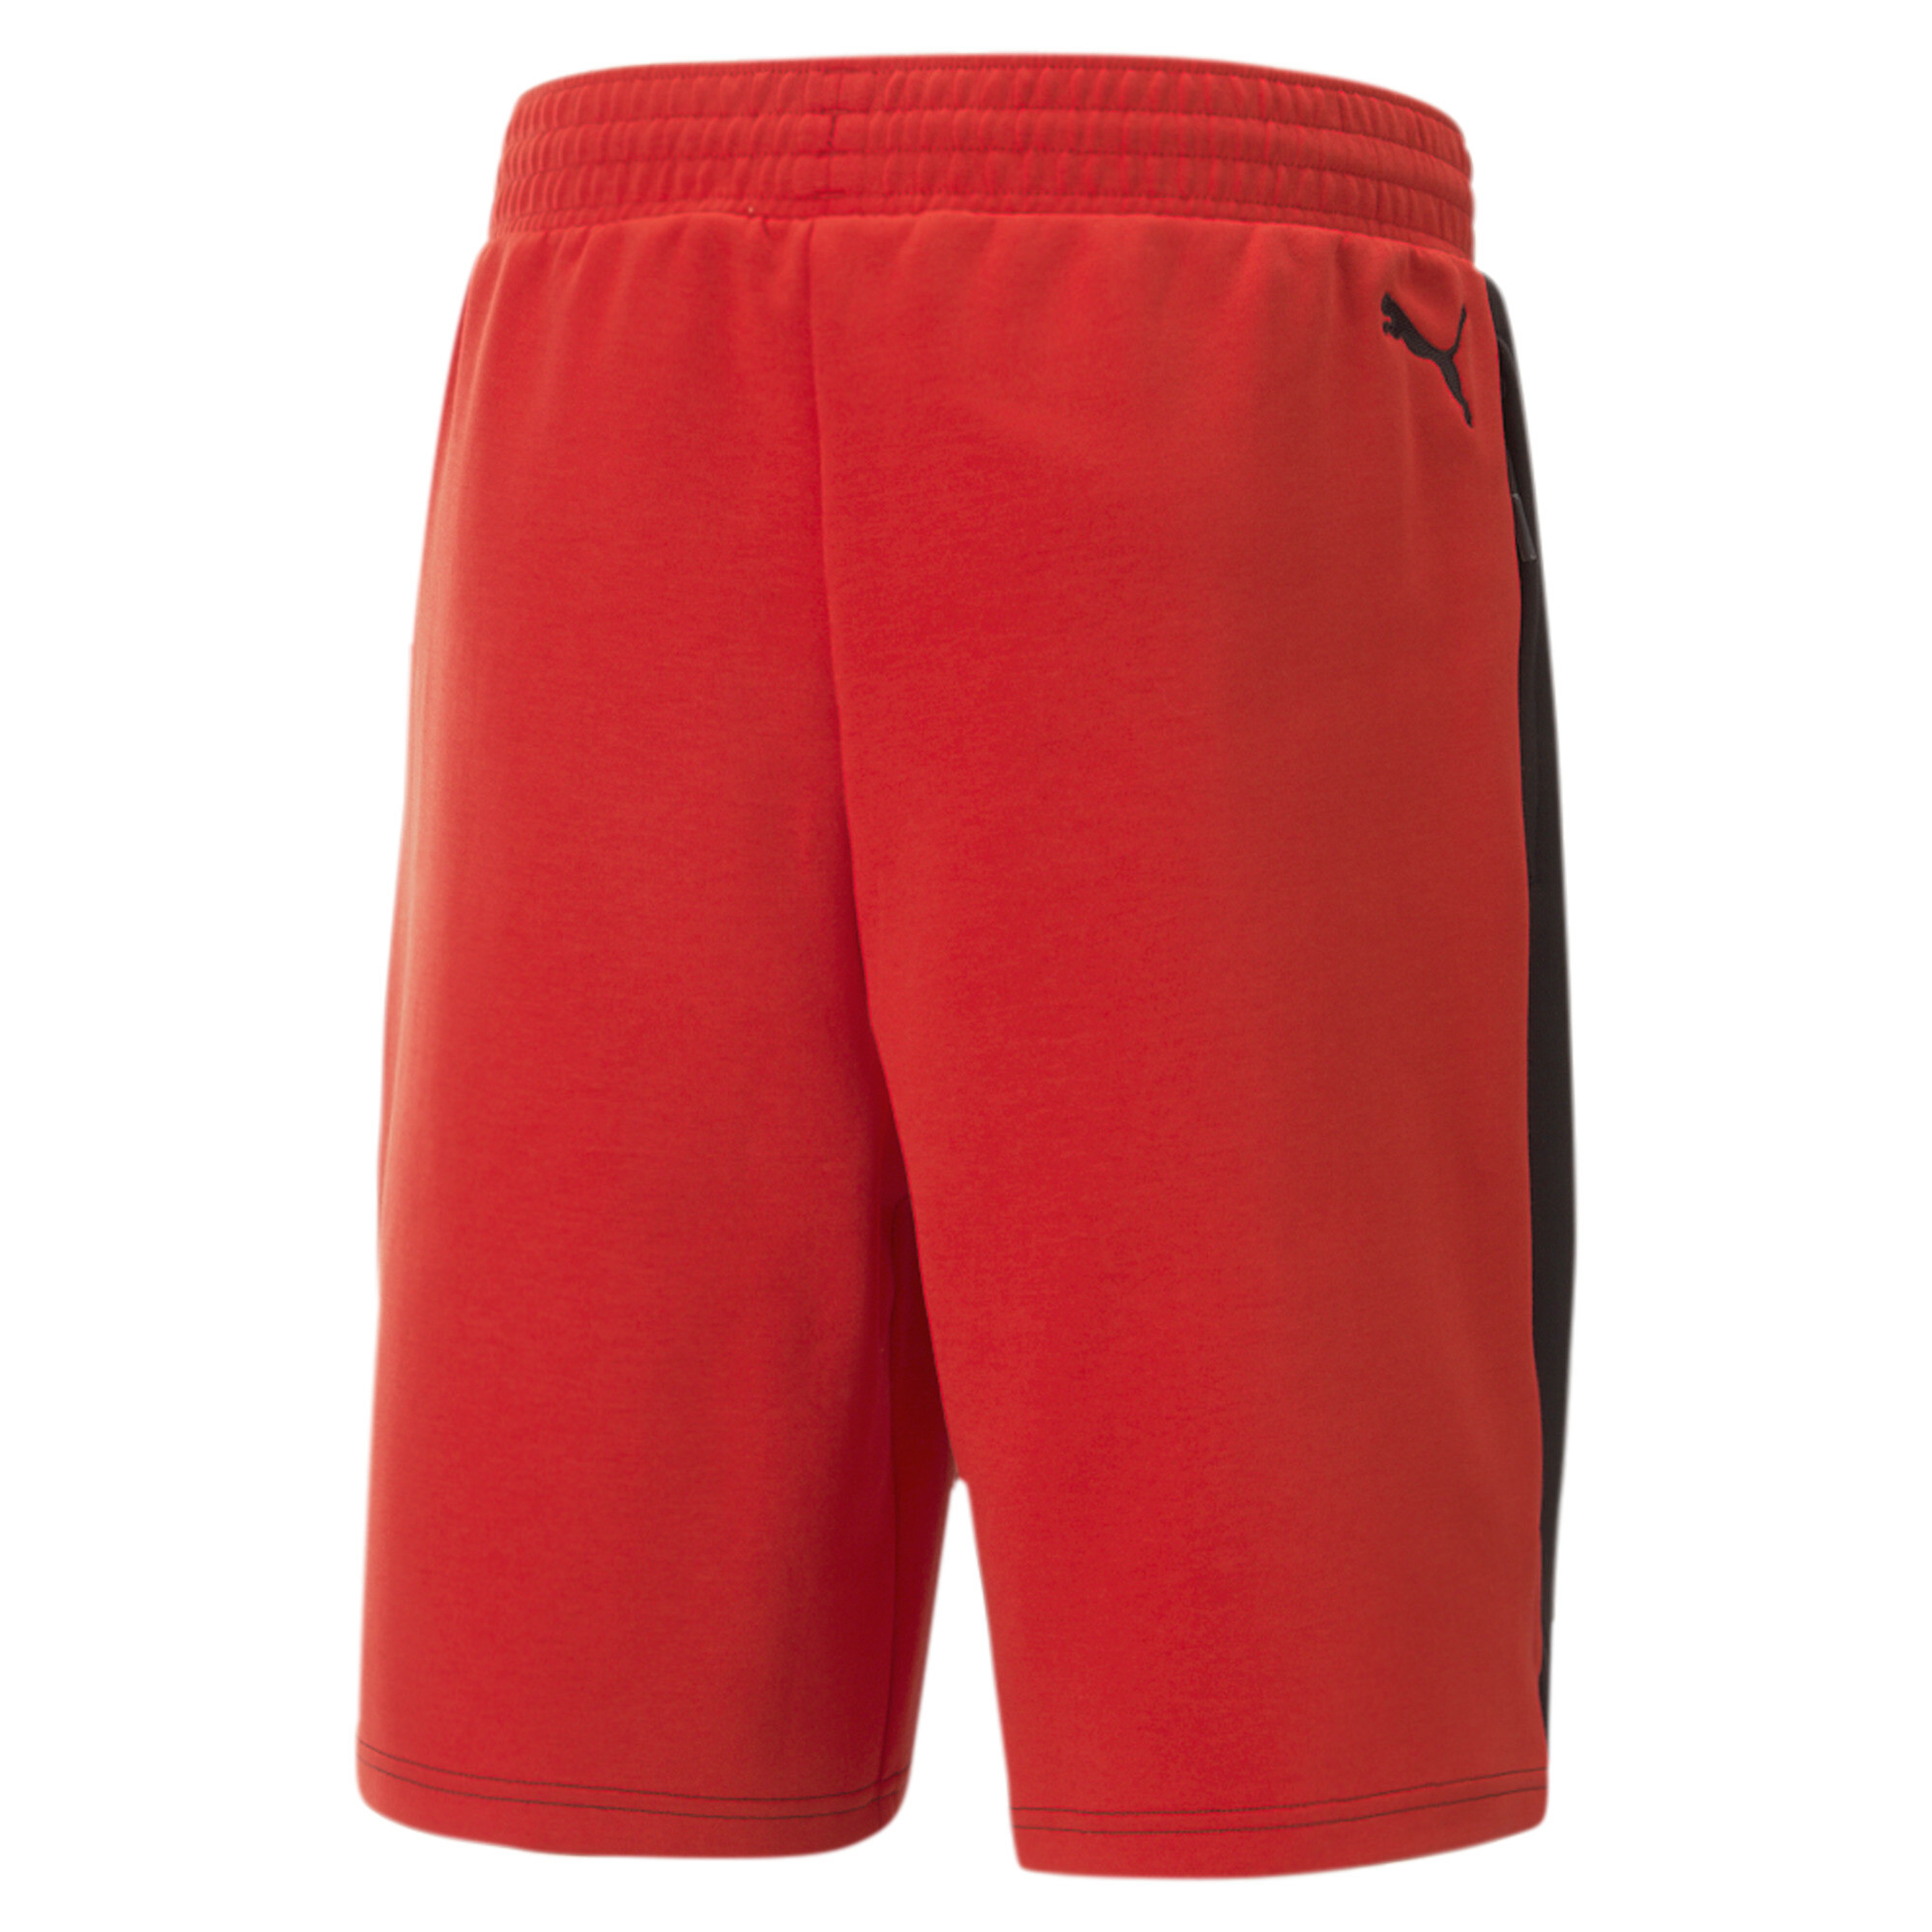 Men's PUMA X MELO Dime Shorts In Red, Size Medium